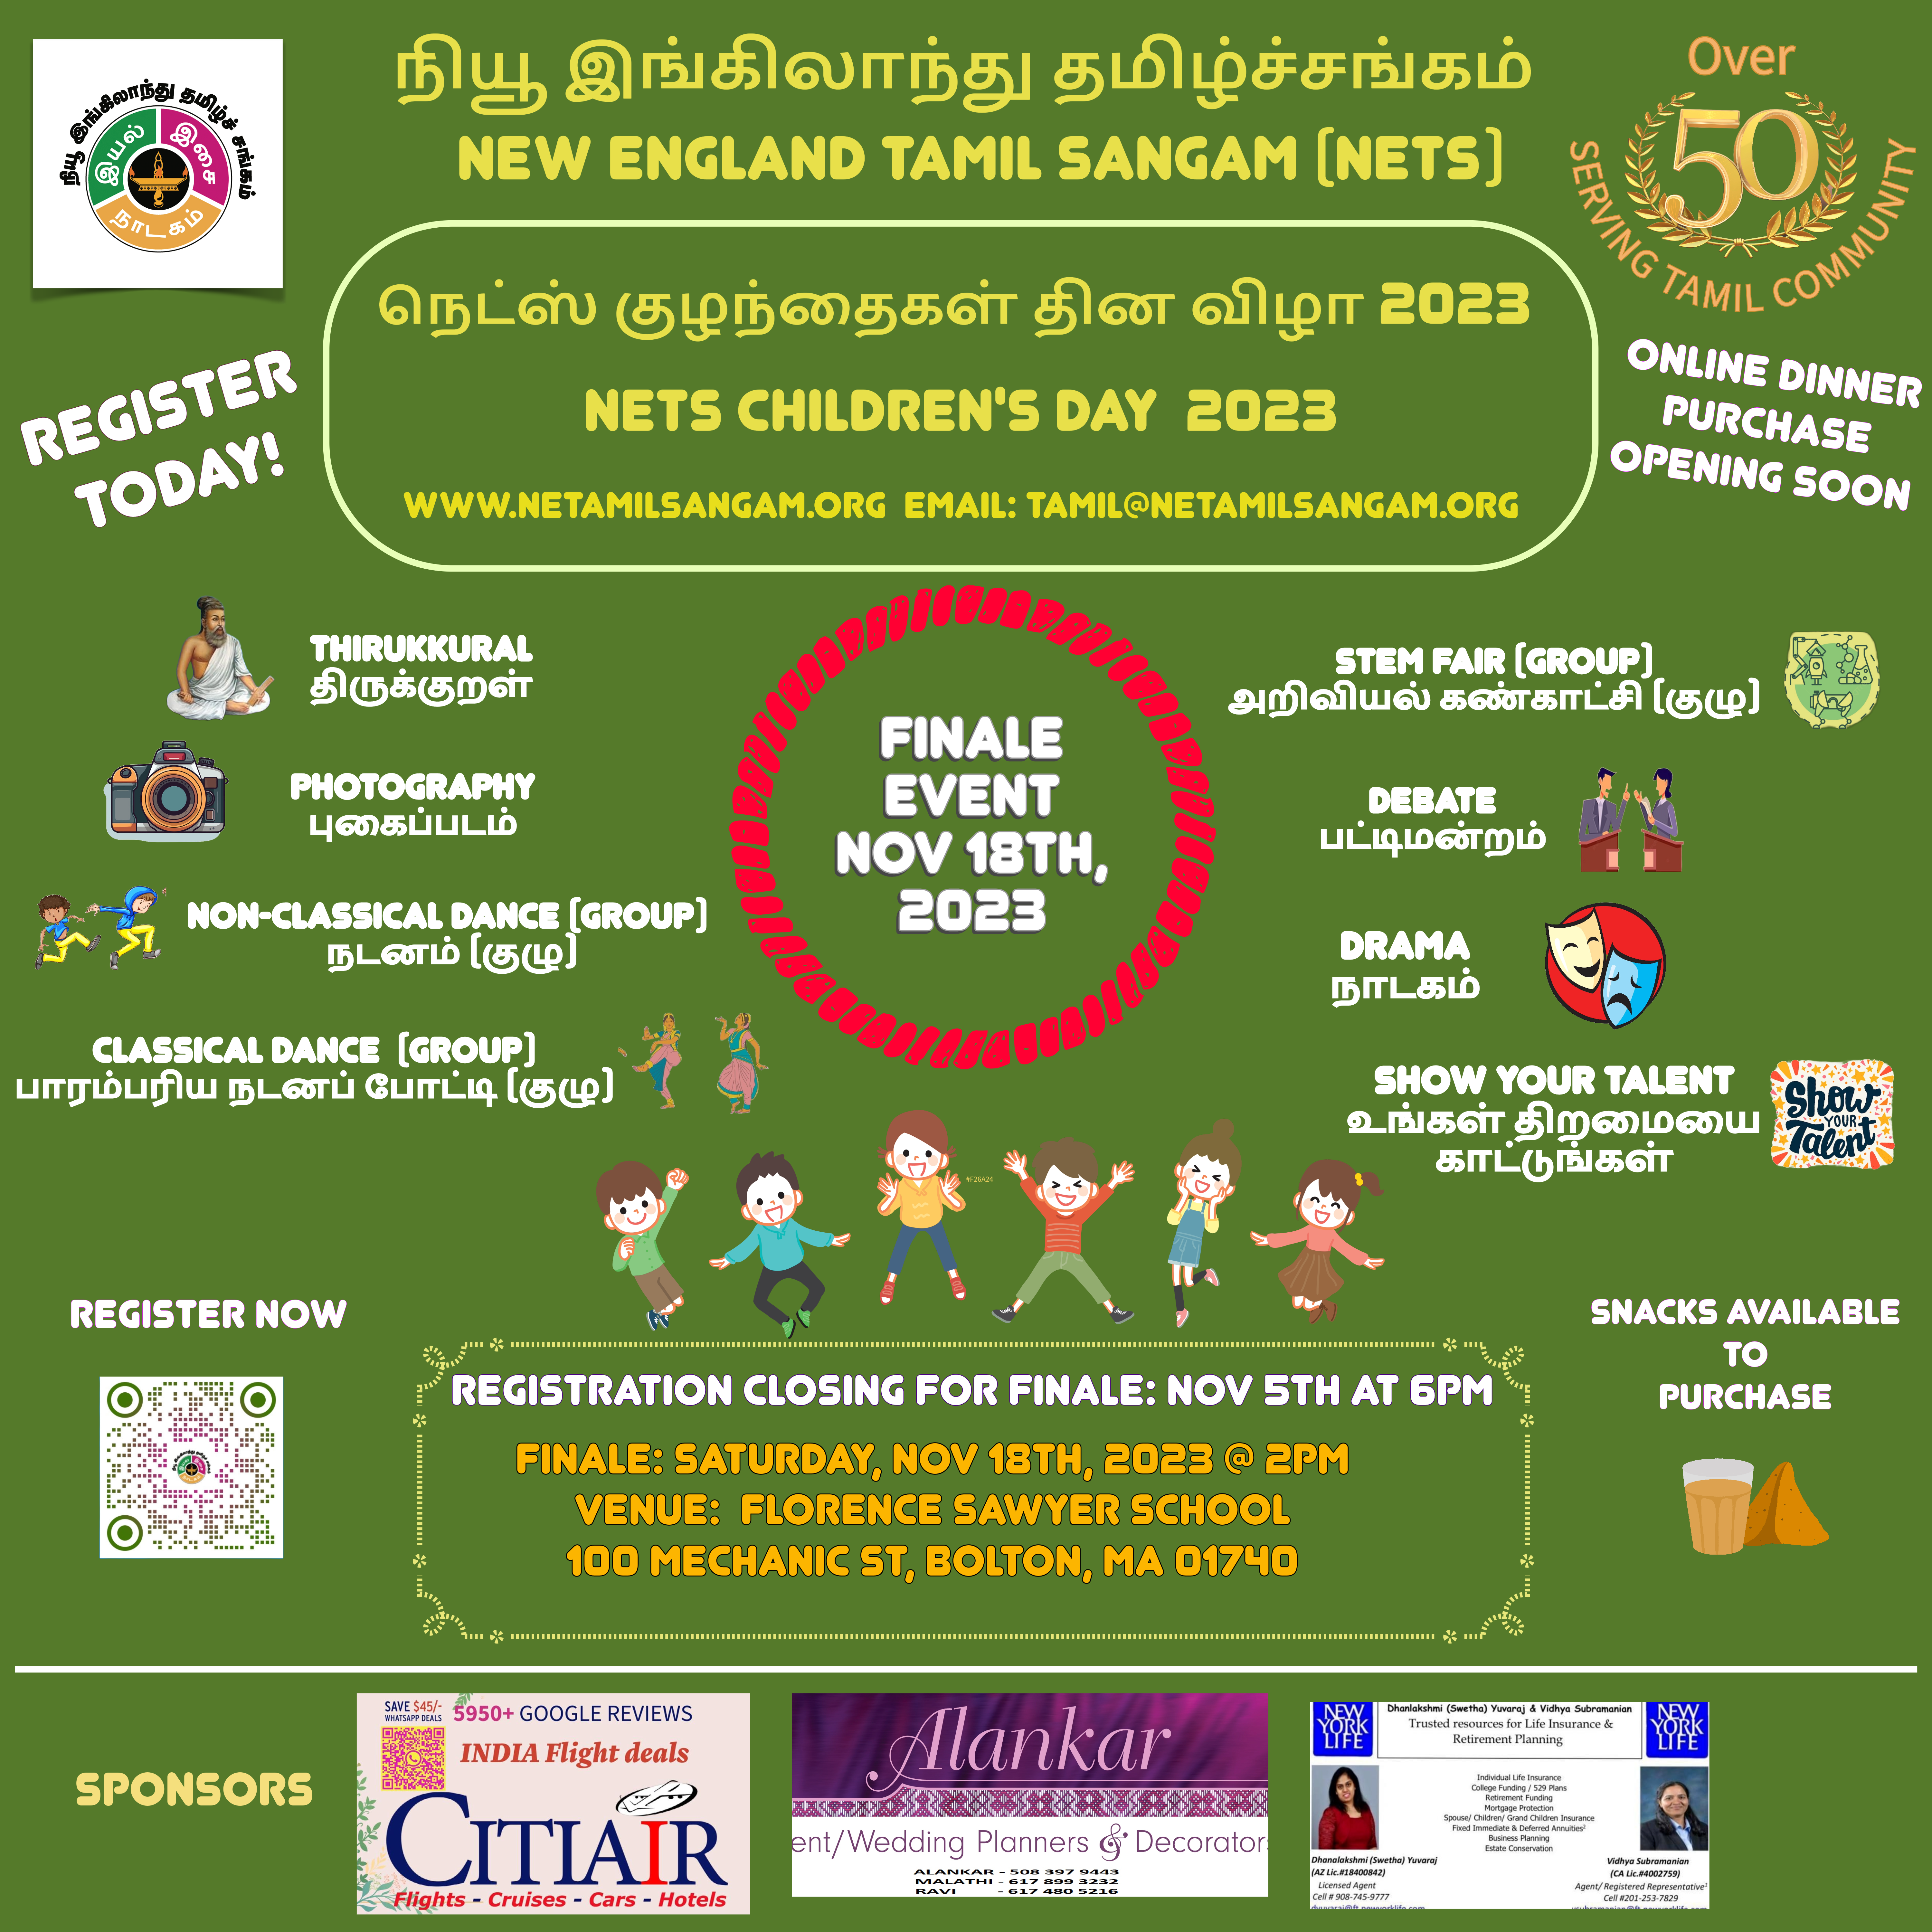 NETS Childrens Day 2023